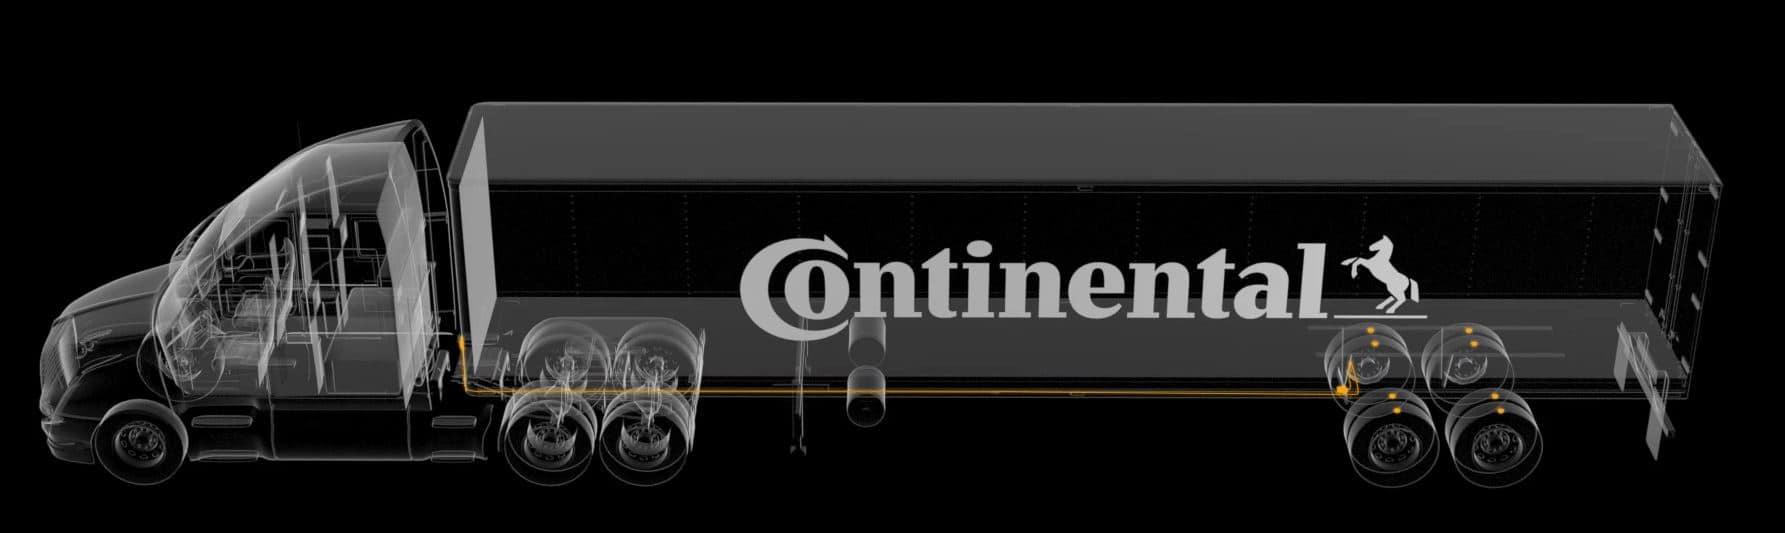 Continental tire truck graphic